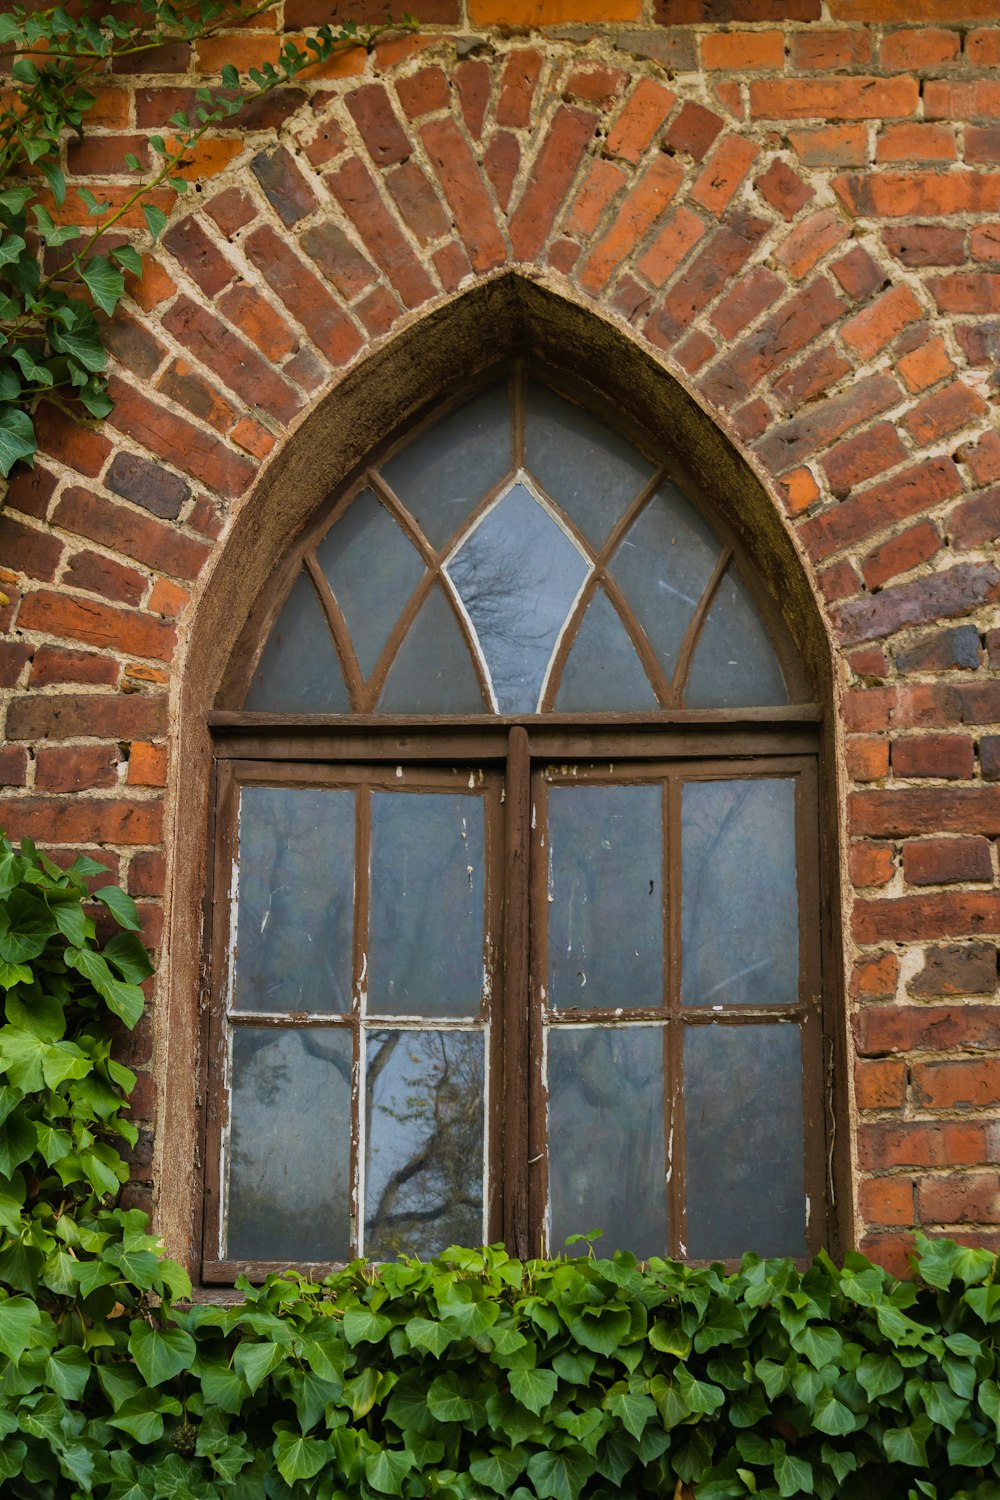 a window in a brick building